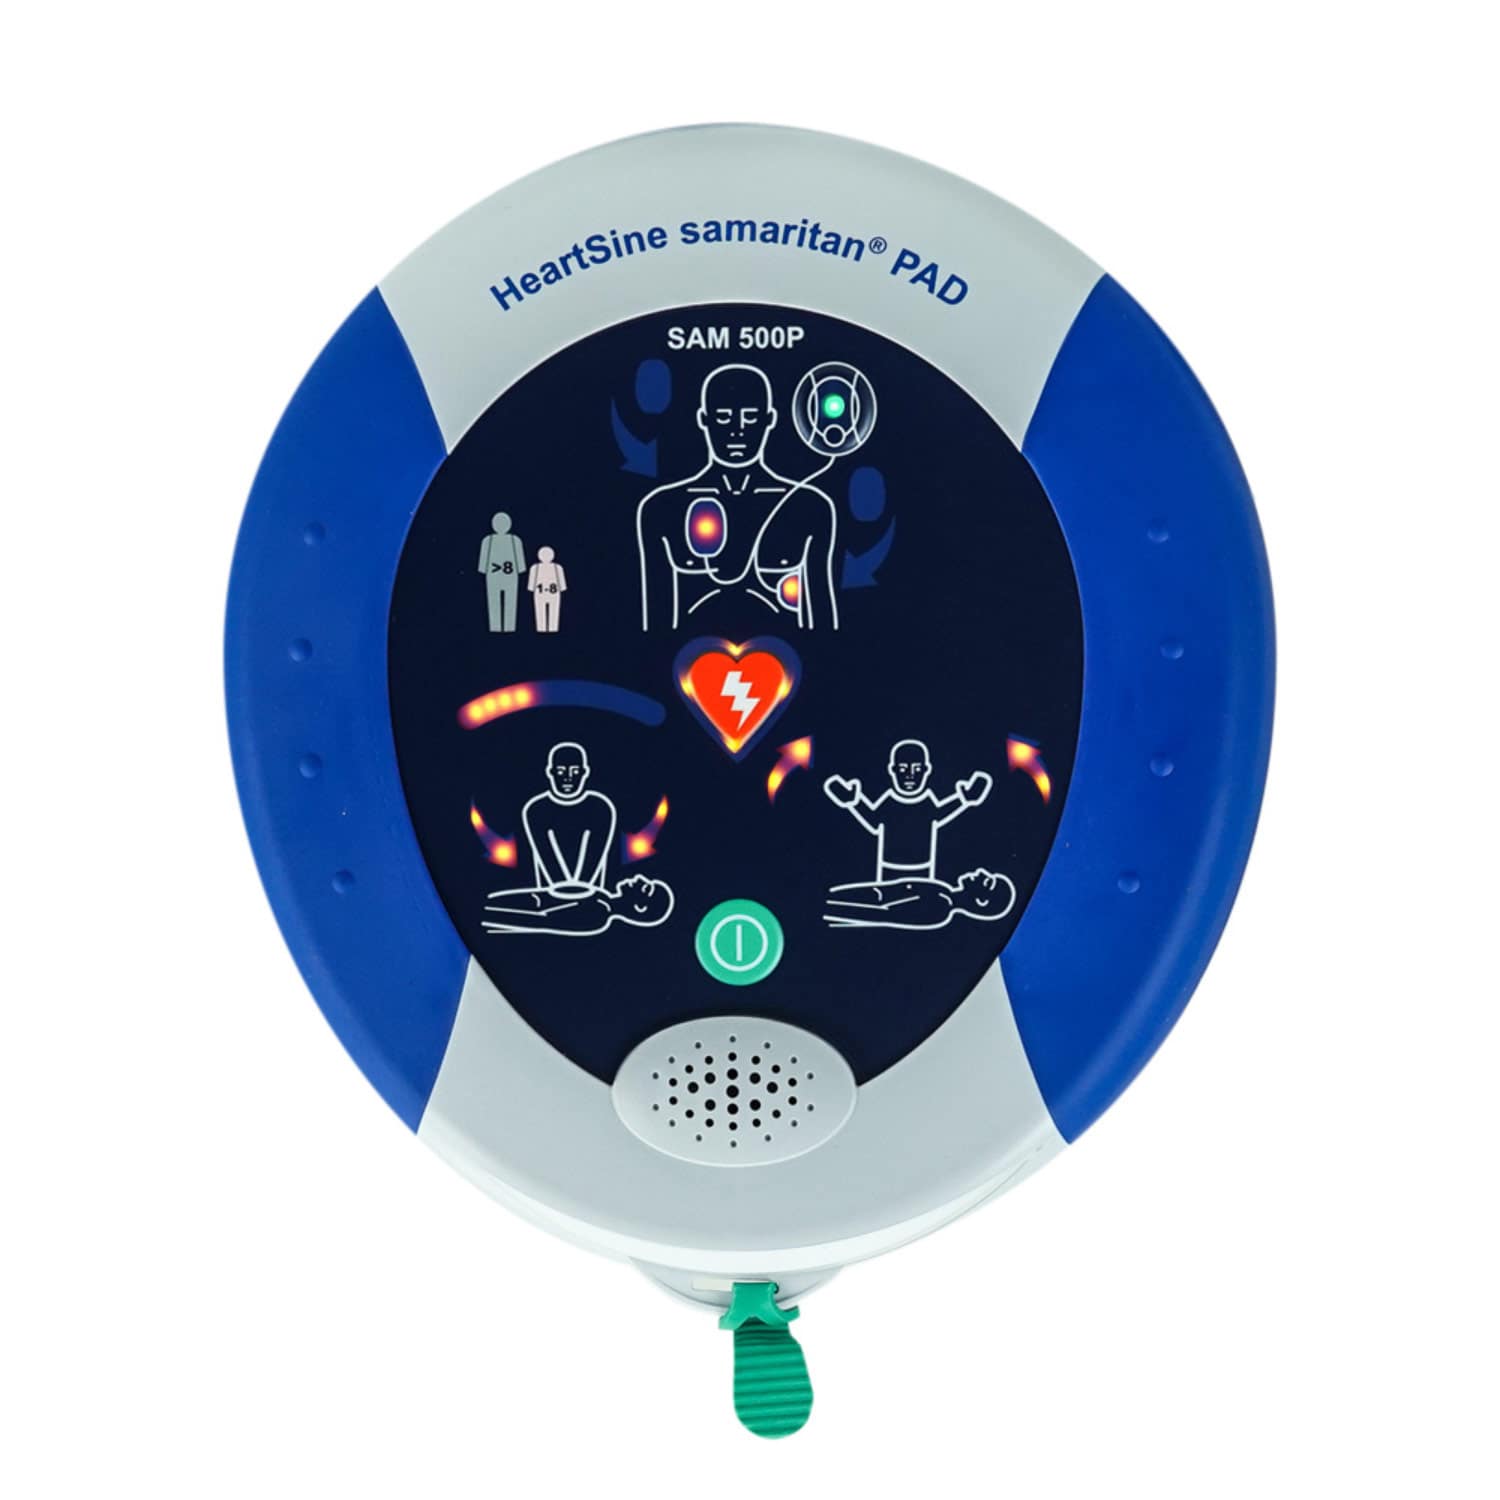 Heartsine® Samaritan® Pad 500P Semi-Automatic Defibrillator 